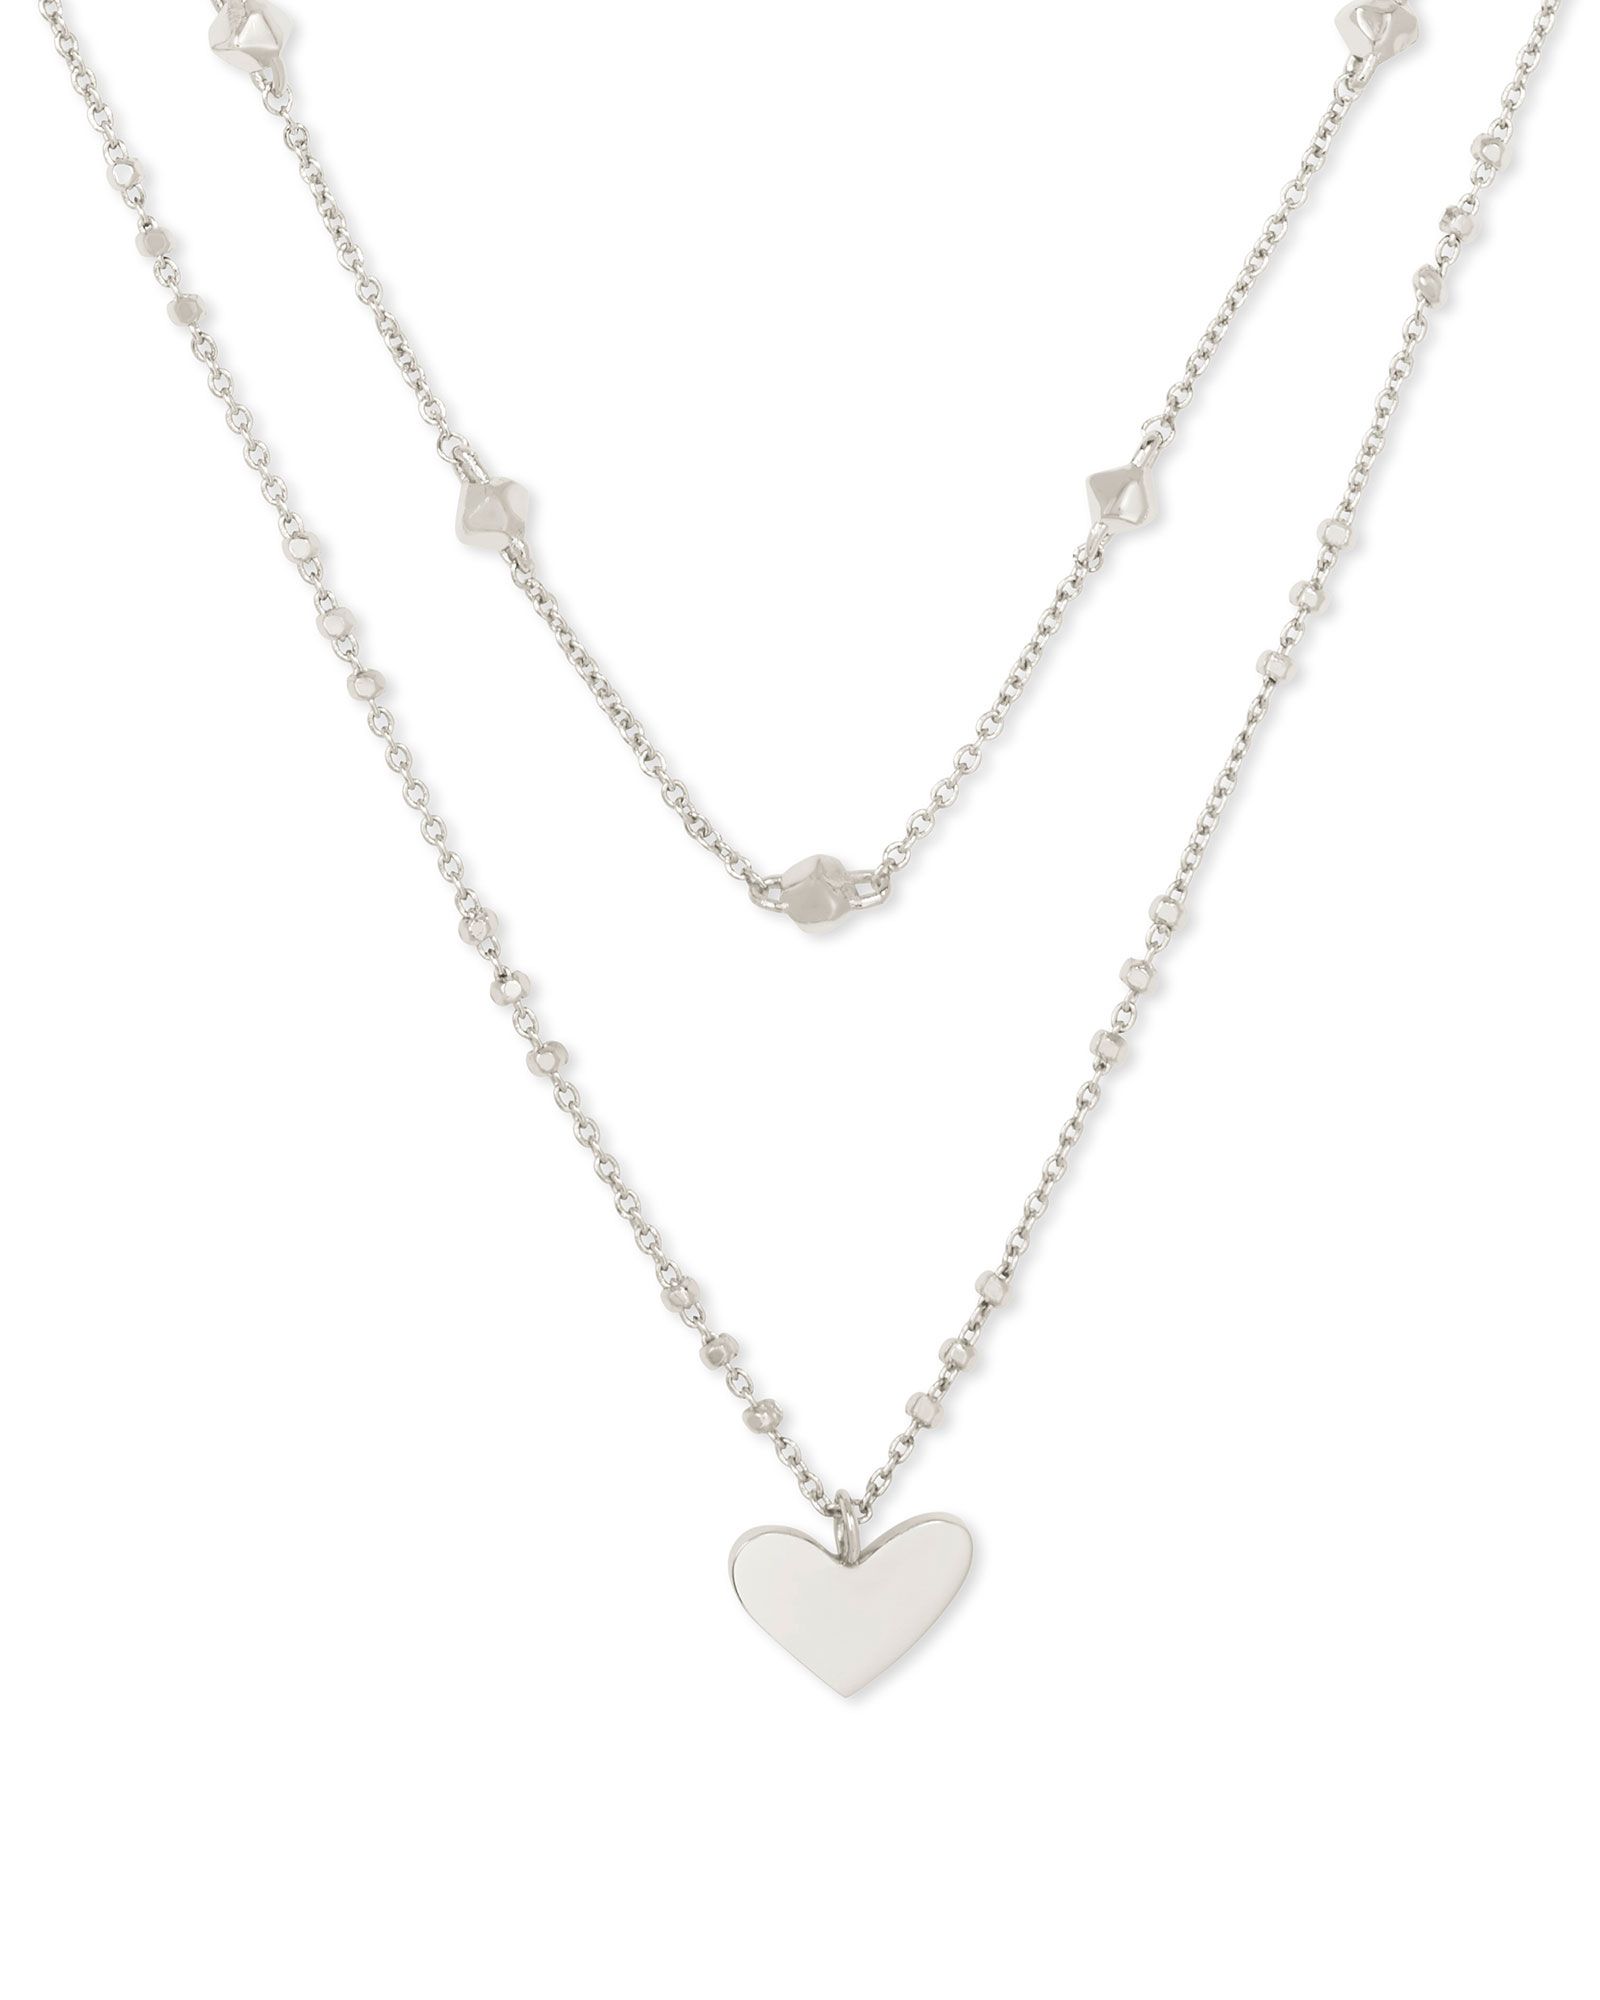 Ari Heart Multi Strand Necklace in Silver | Kendra Scott | Kendra Scott